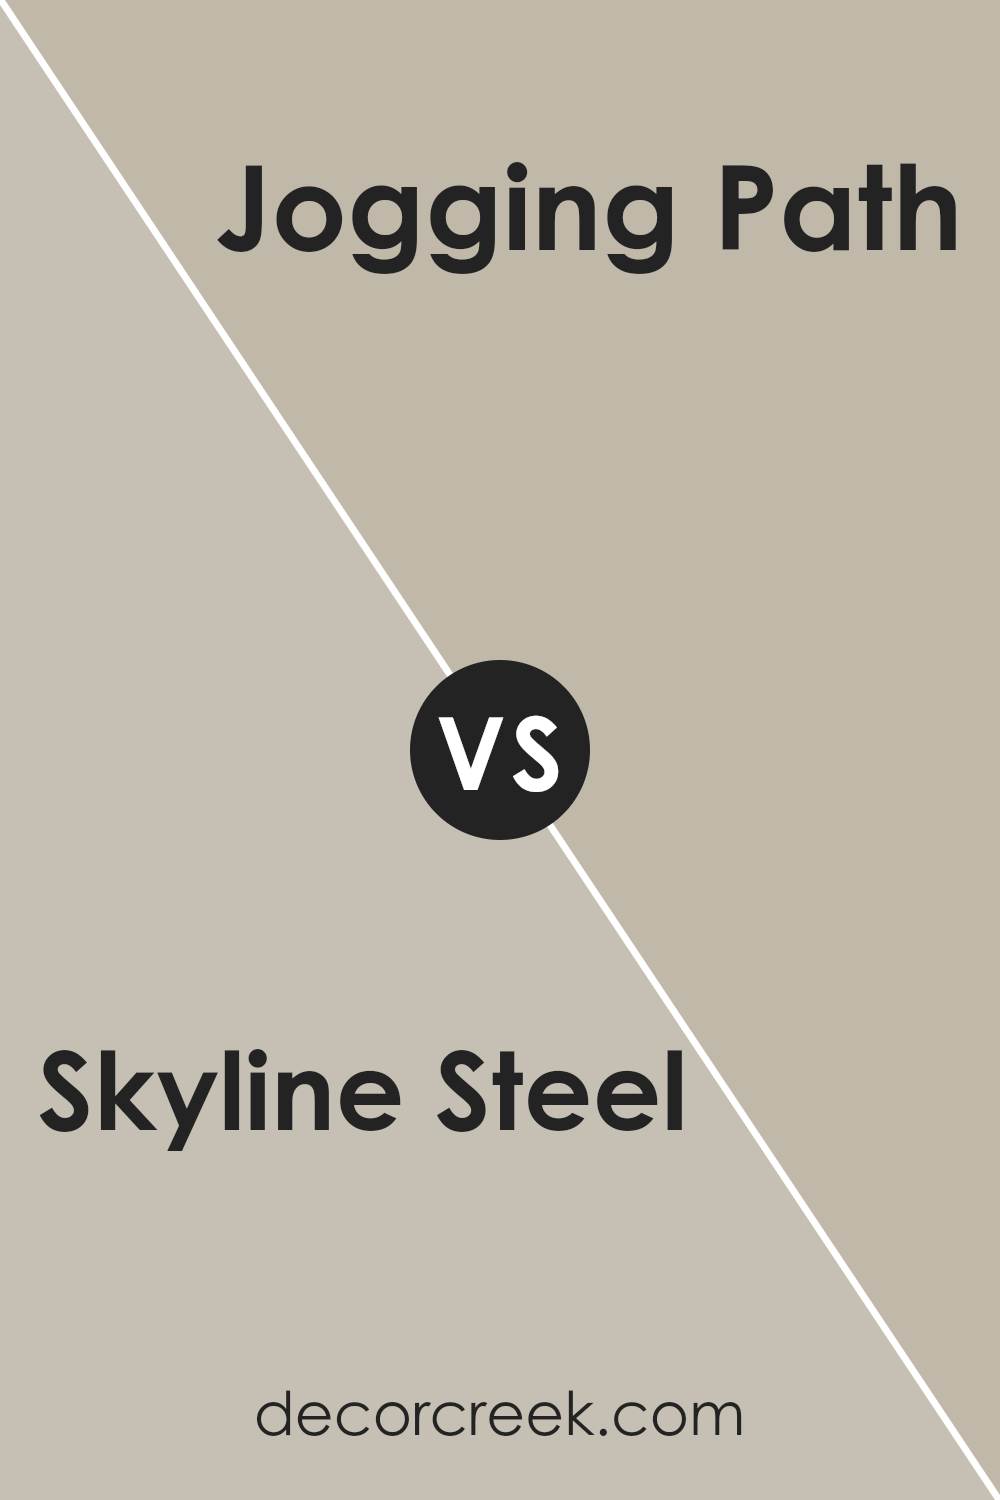 skyline_steel_sw_1015_vs_jogging_path_sw_7638